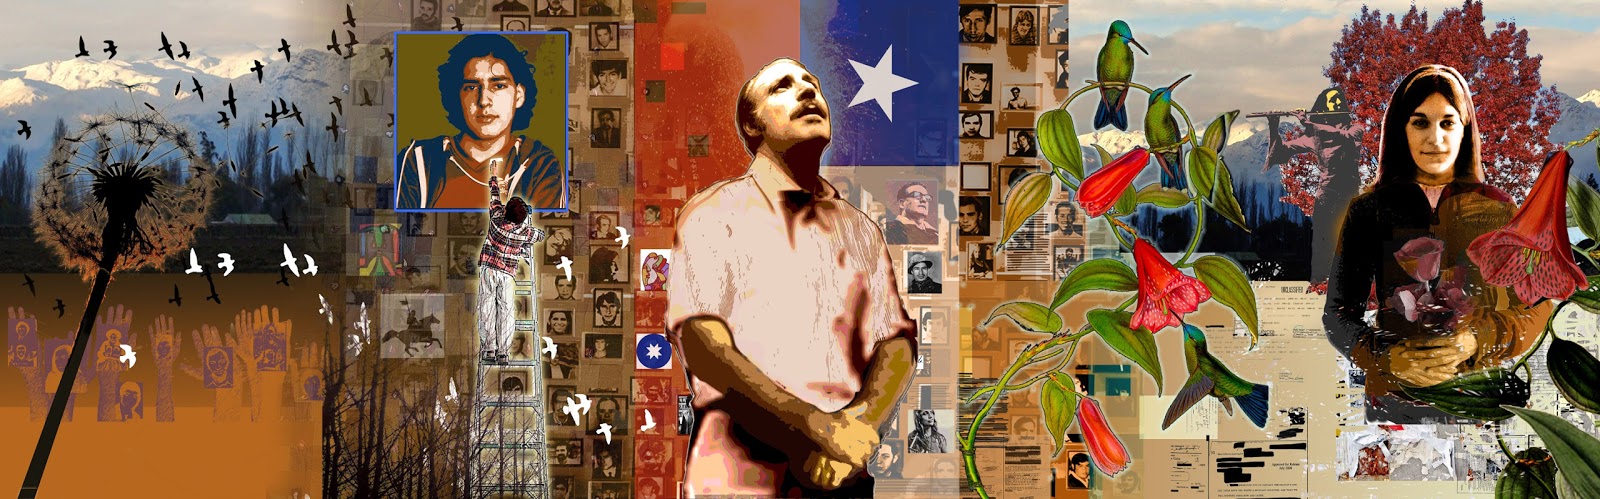 Composite image of Todas las Manos mural